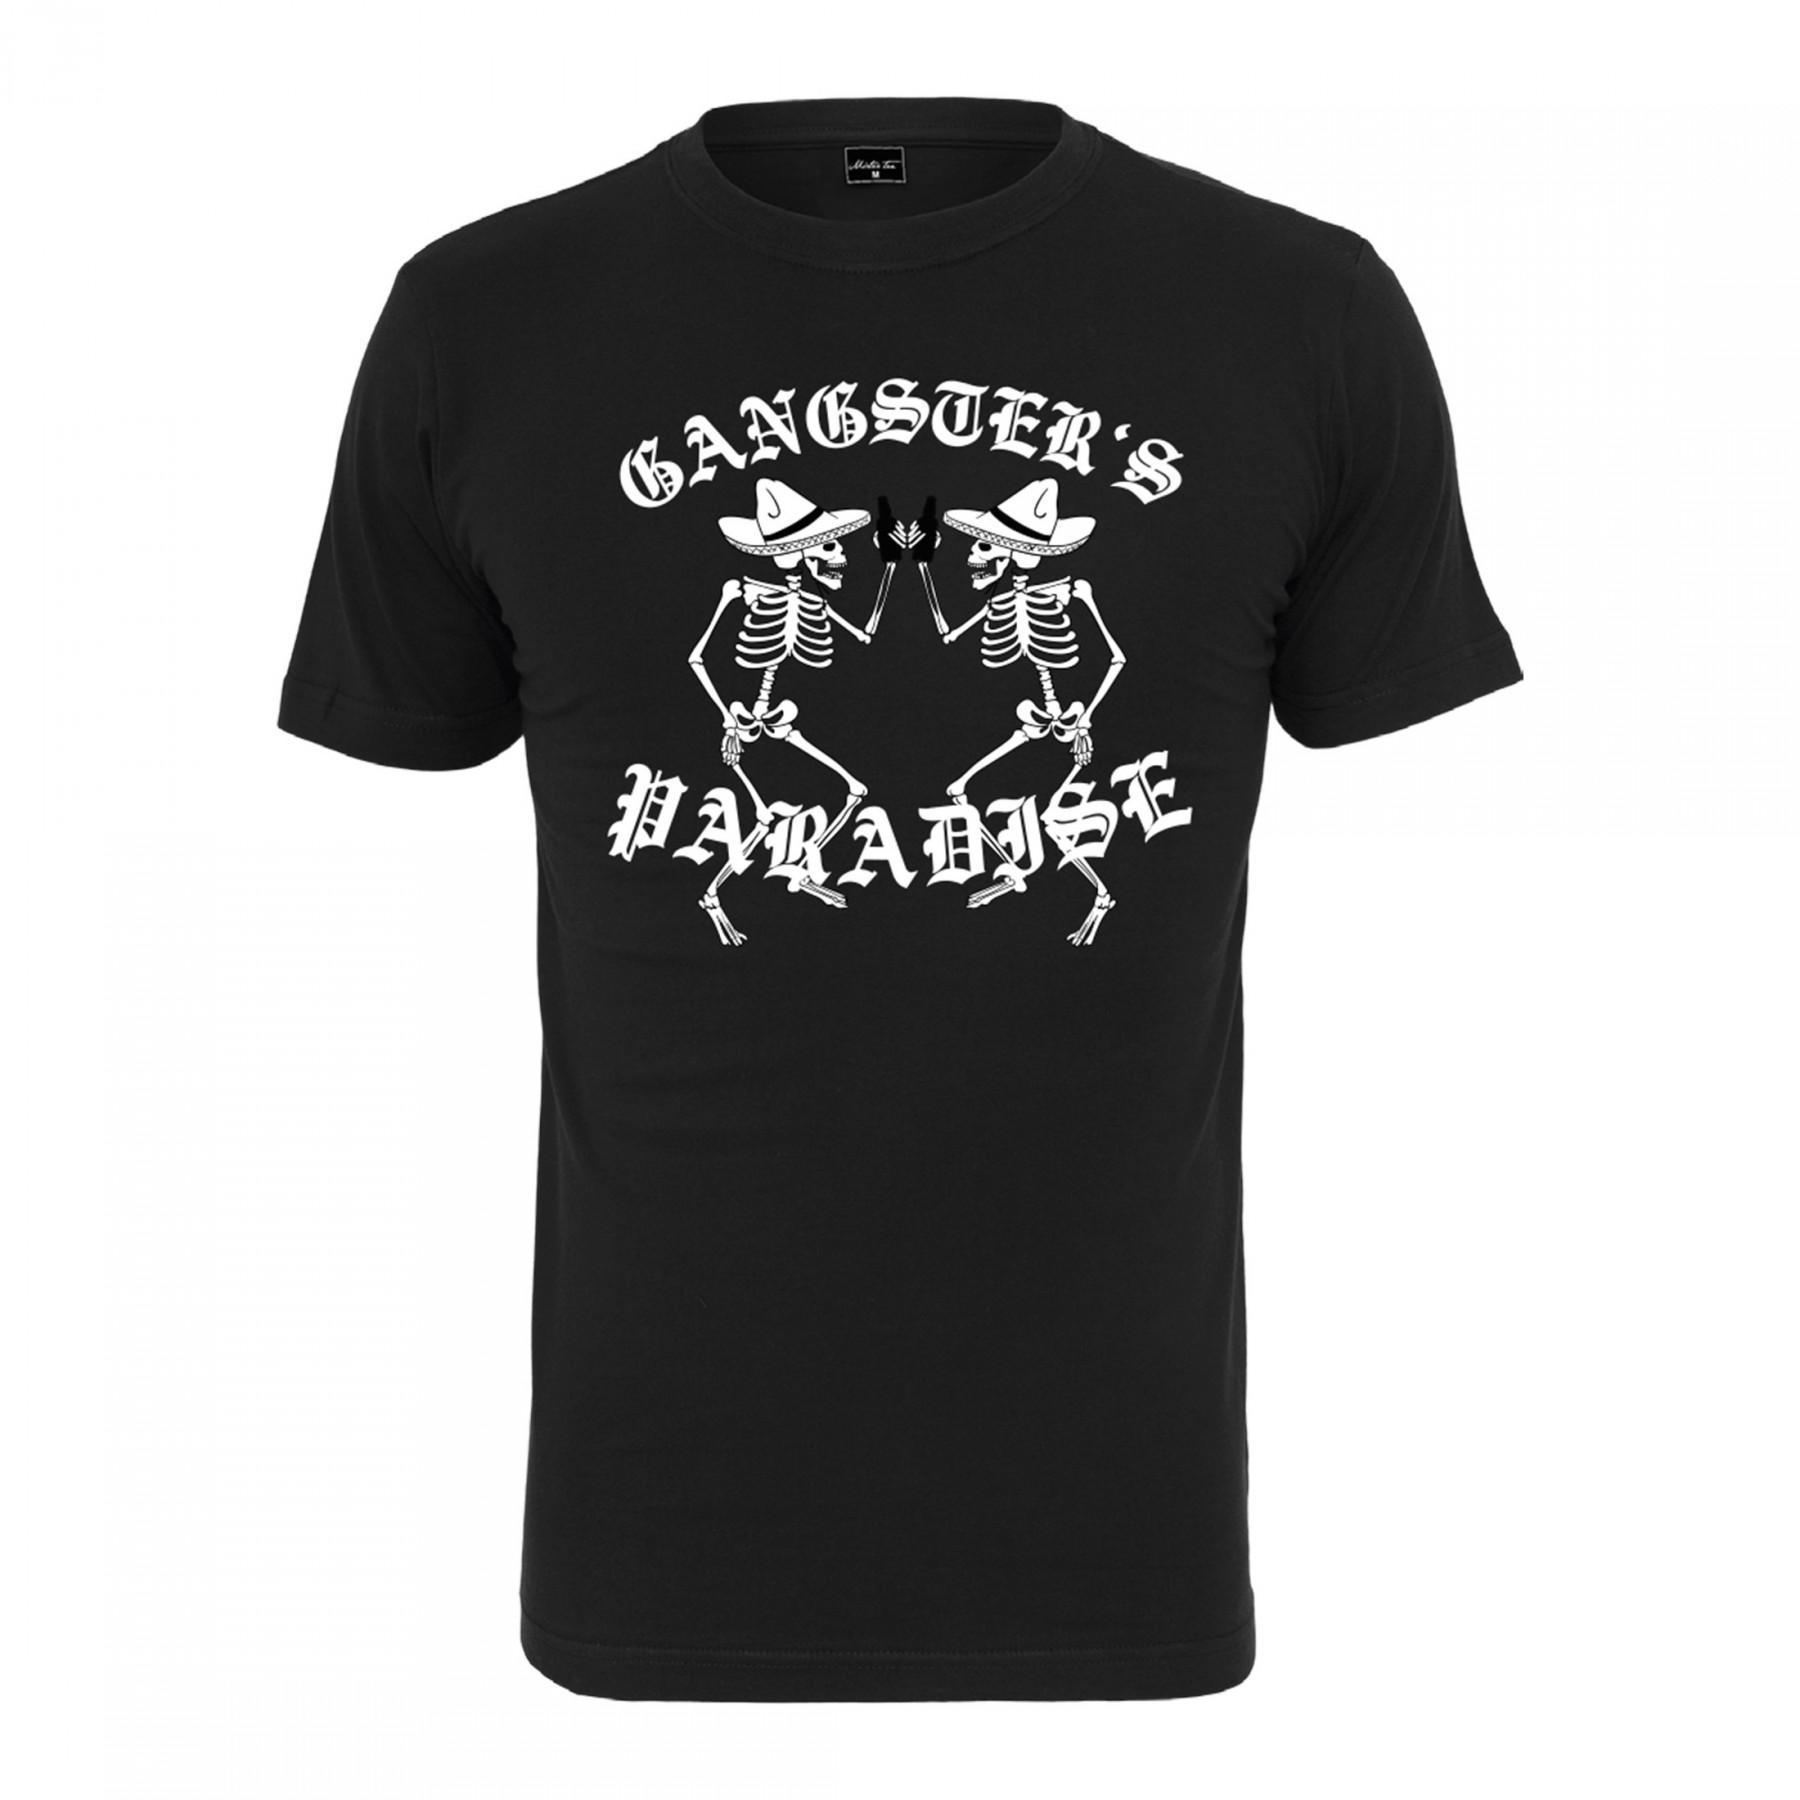 Camiseta Mister Tee gangter' s paradie